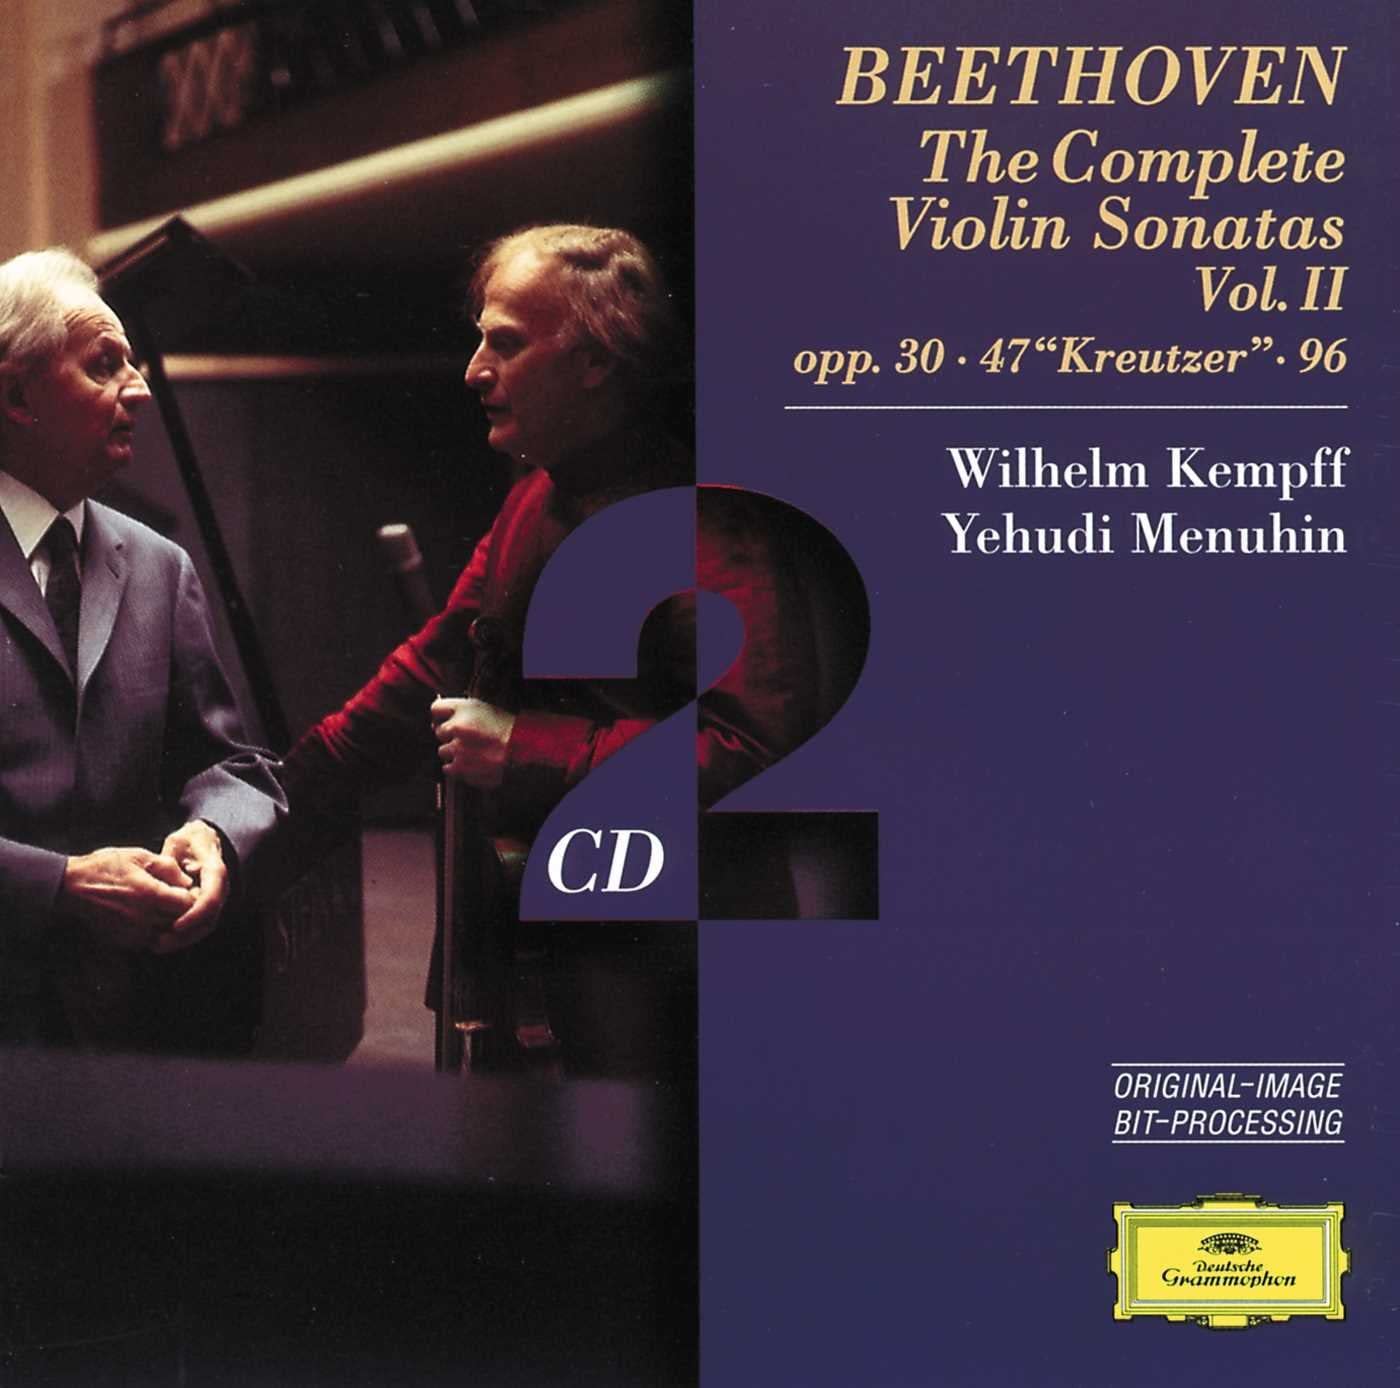 Beethoven: The Complete Violin Sonatas Vol. II | Wilhelm Kempff, Yehudi Menuhin